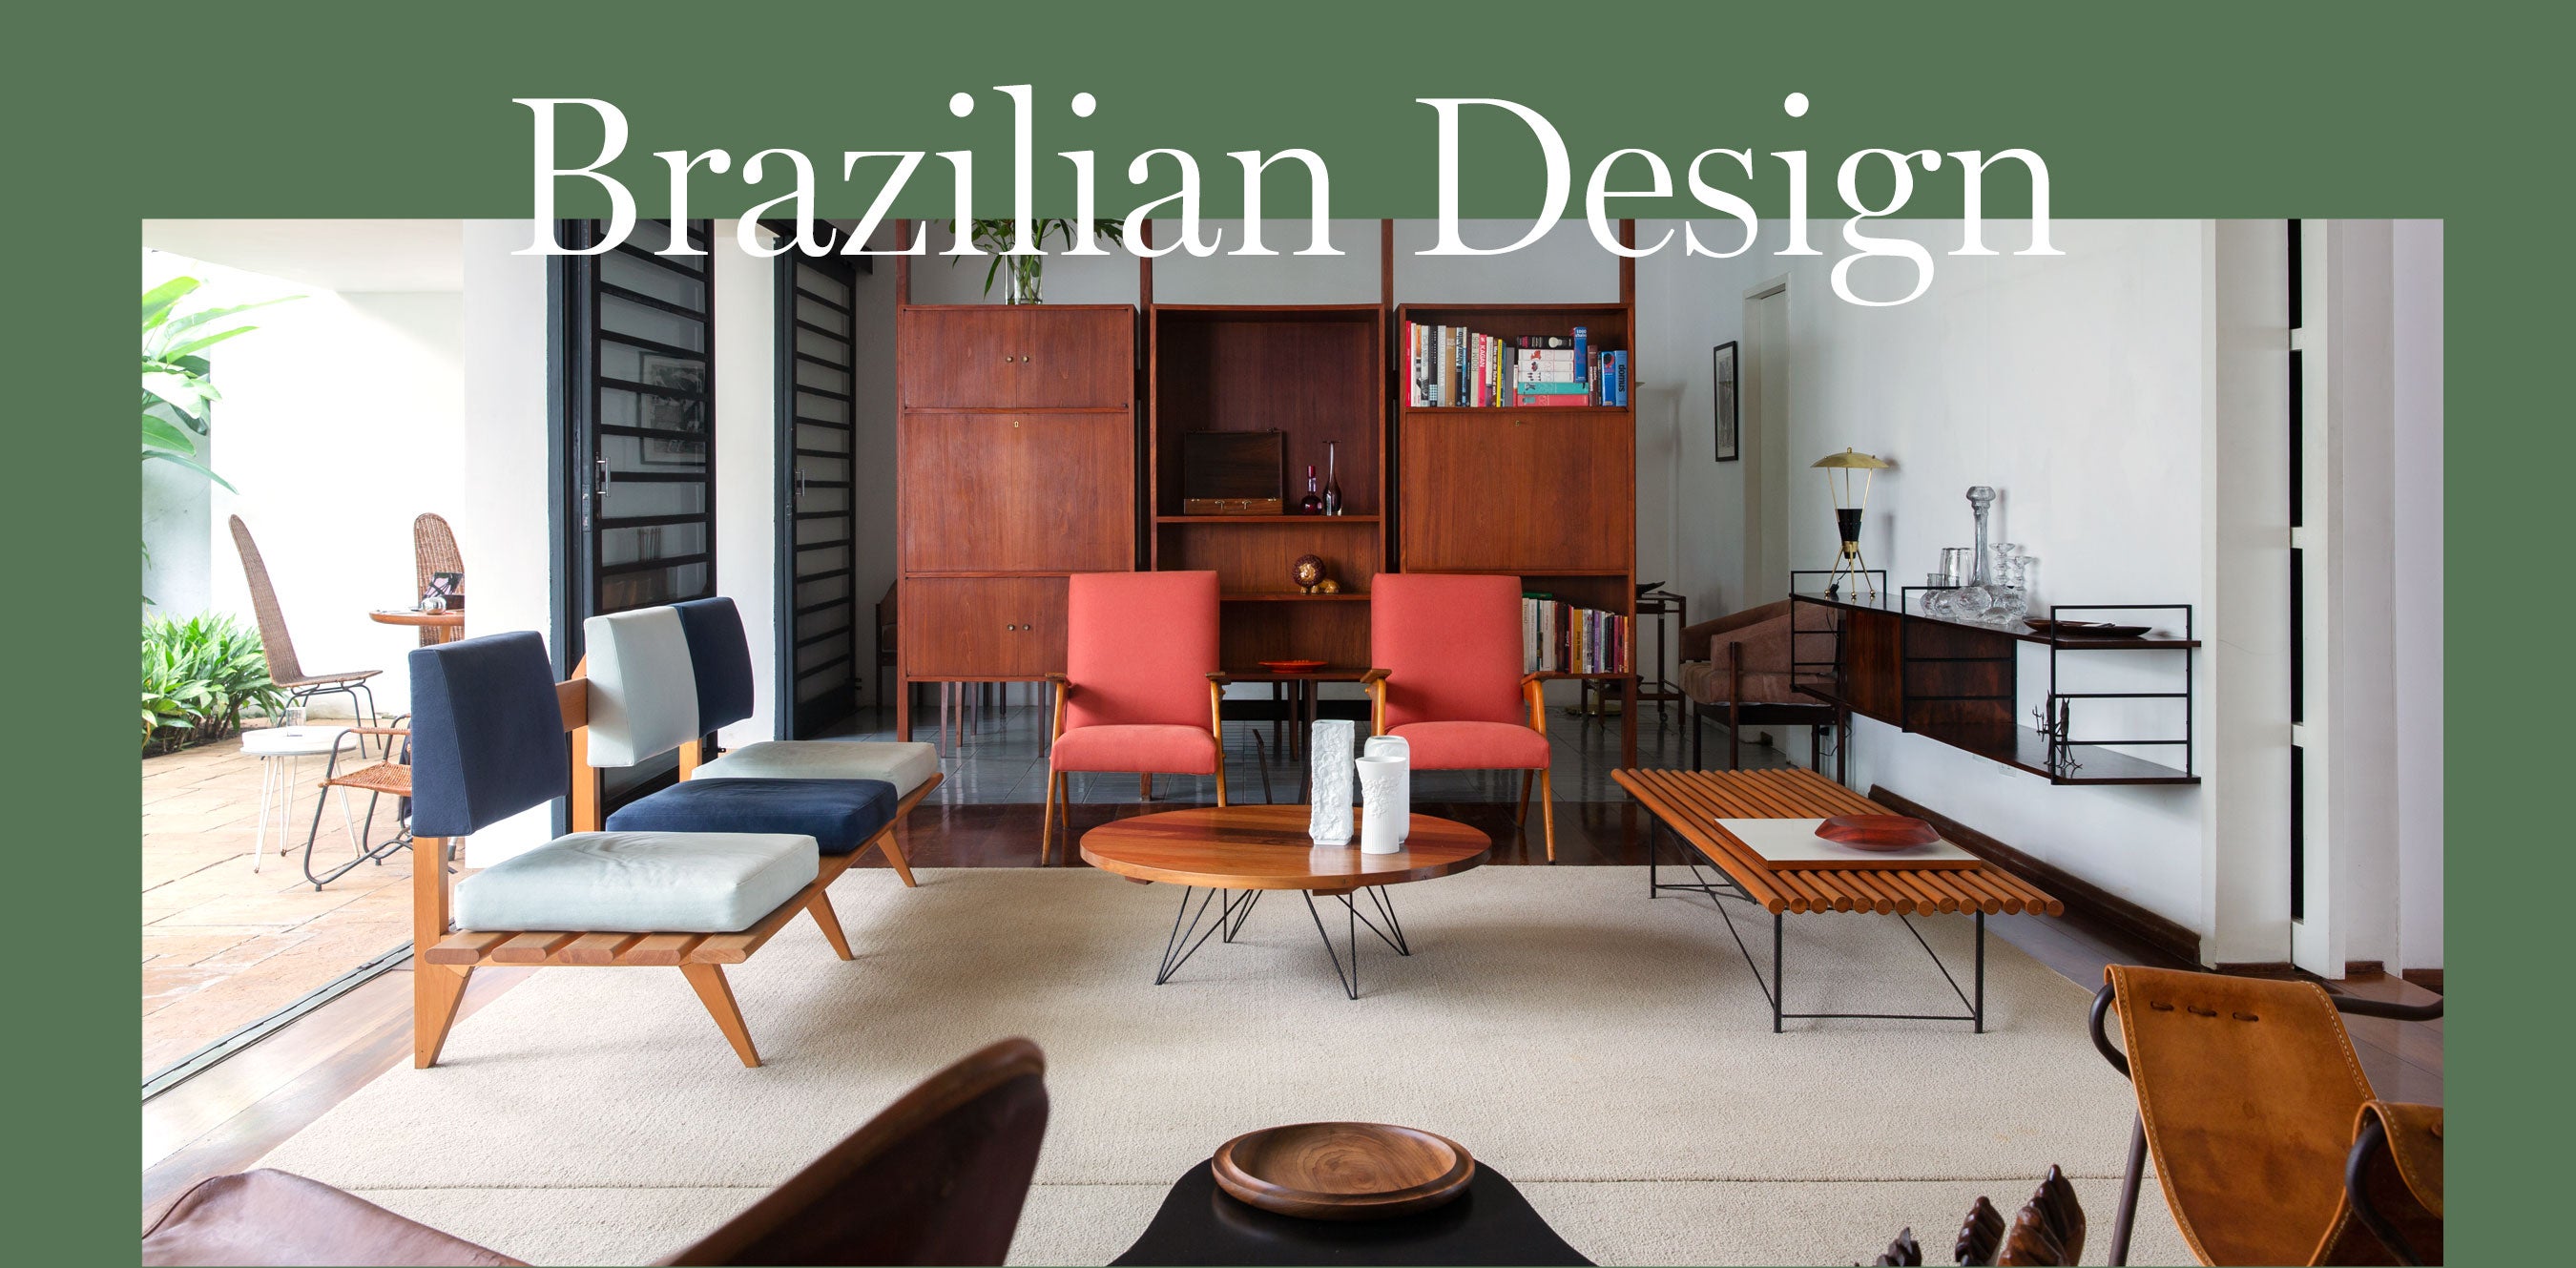 brazilian_design_hero